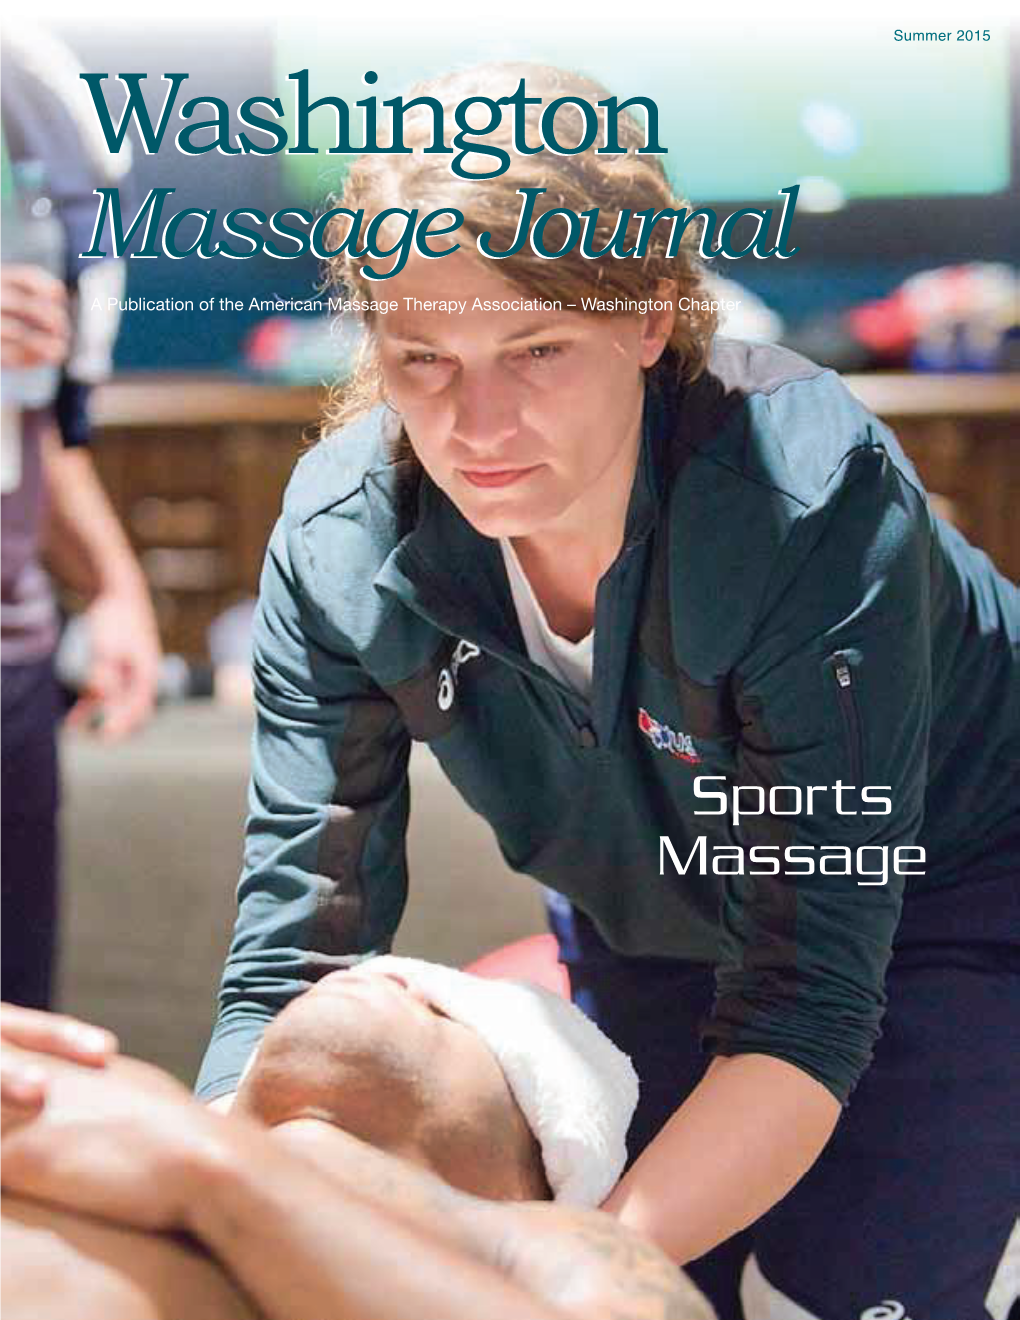 Summer 2015 Washingtonwashington Massagemassage Journaljournal a Publication of the American Massage Therapy Association – Washington Chapter